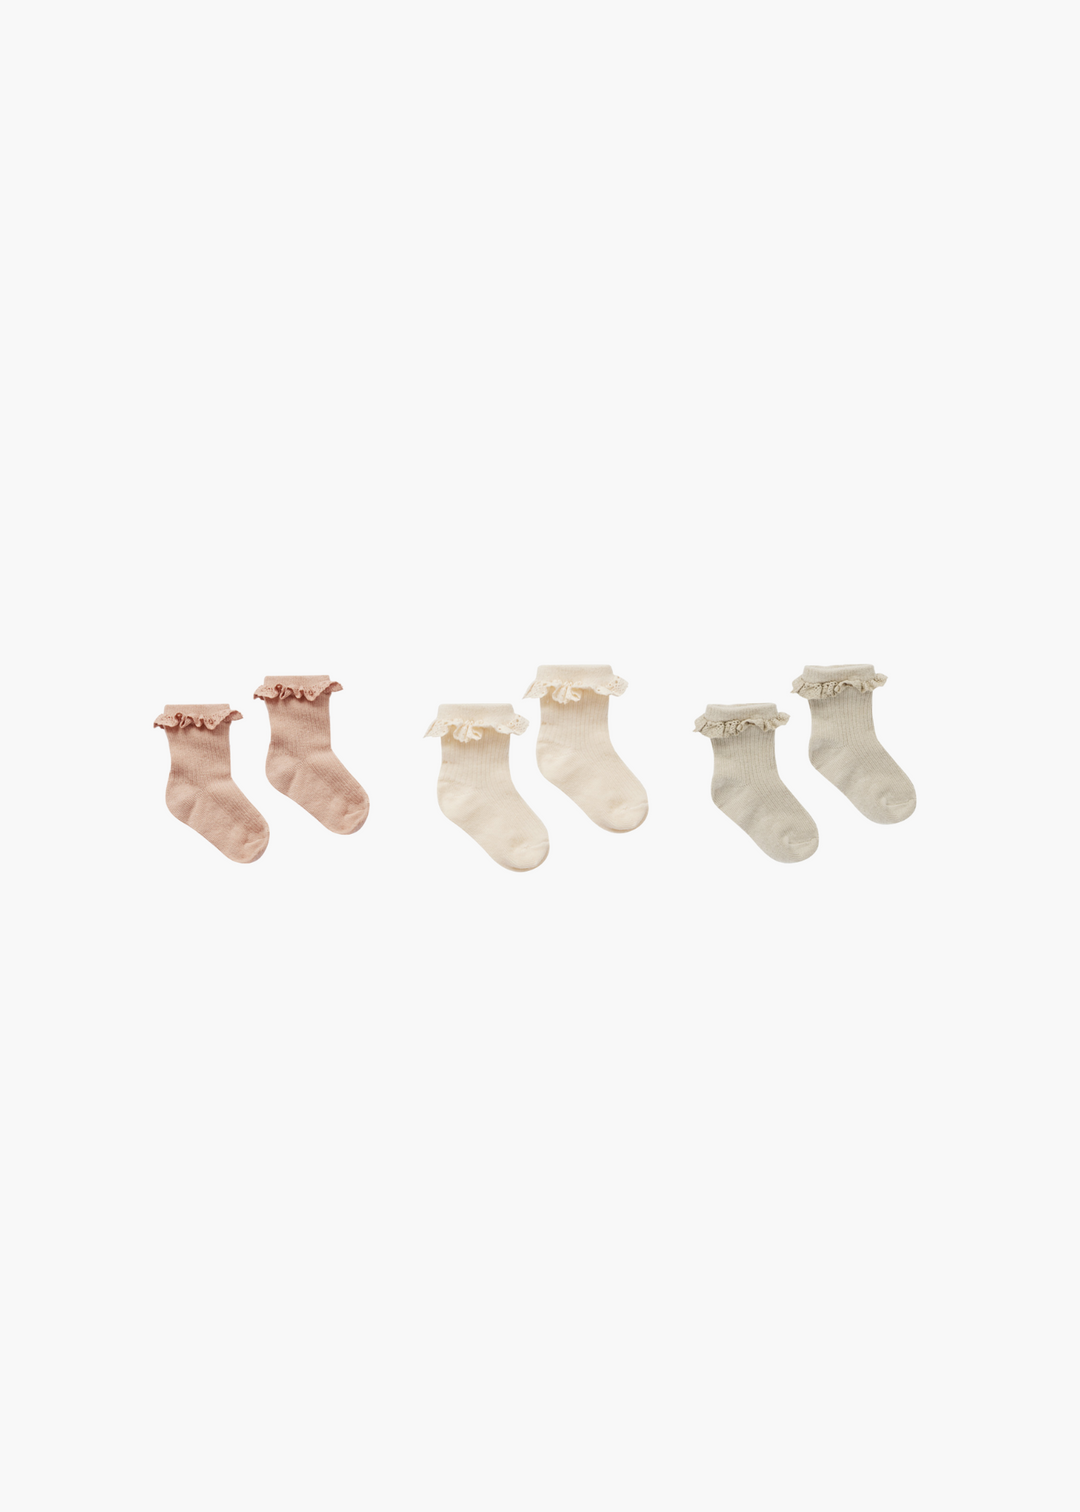 Ruffle Socks, 3-Pack || Dove, Natural, Blush